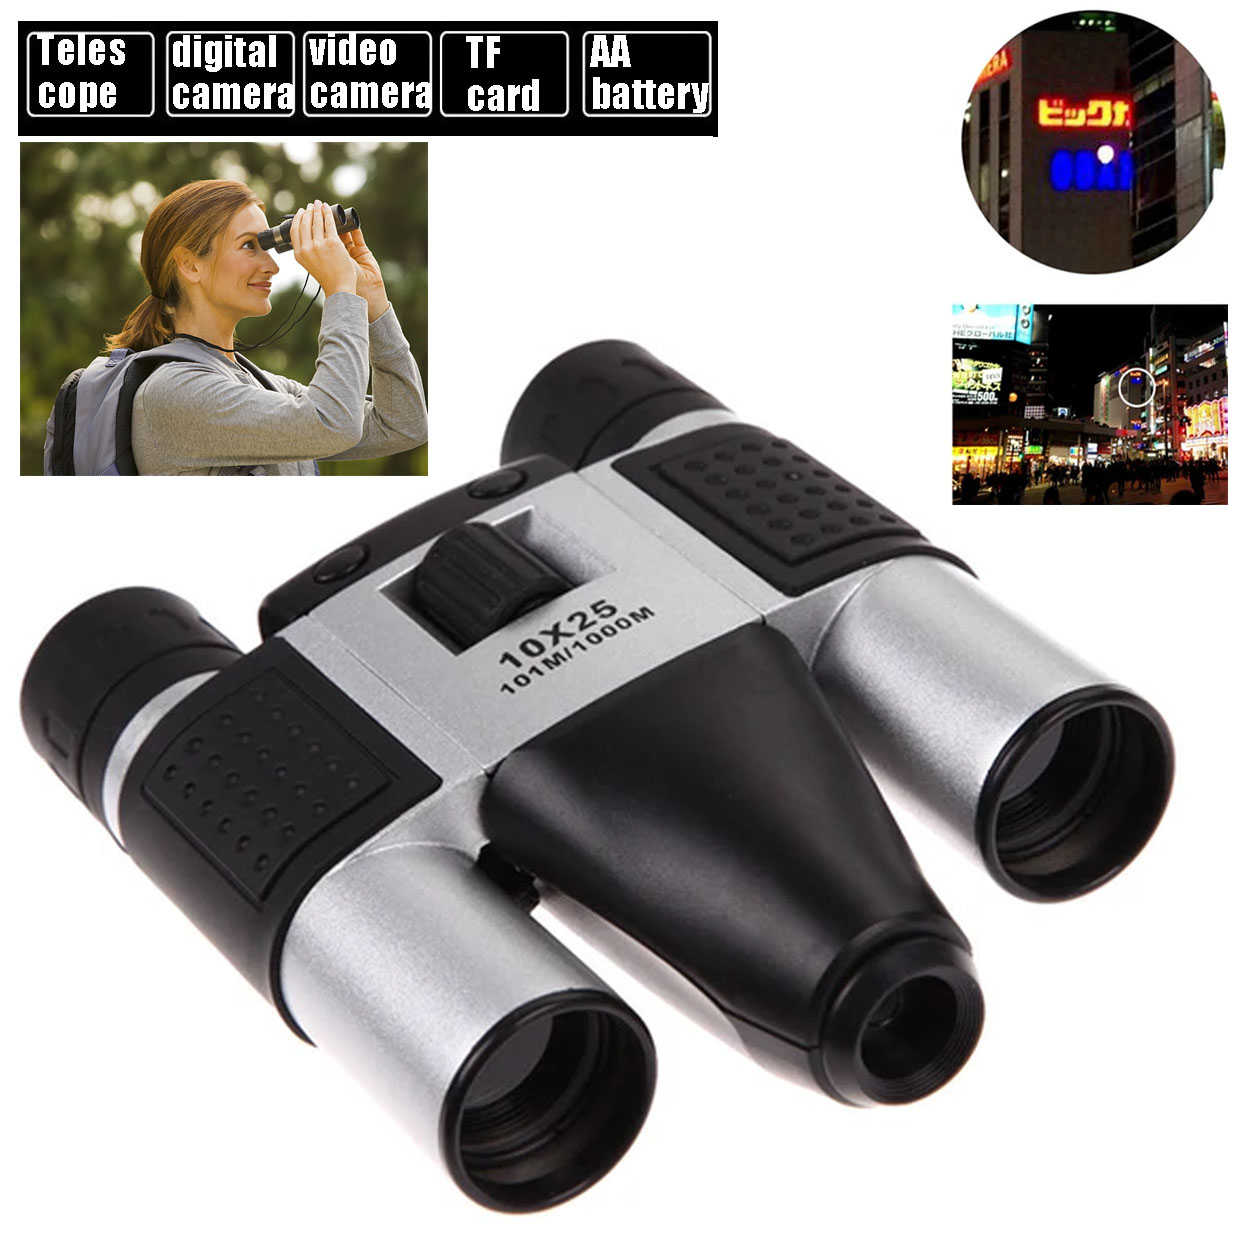 Digital Camera Telescope DT08 10X25 Binoculars for Outdoor Sport DVR Video Record 